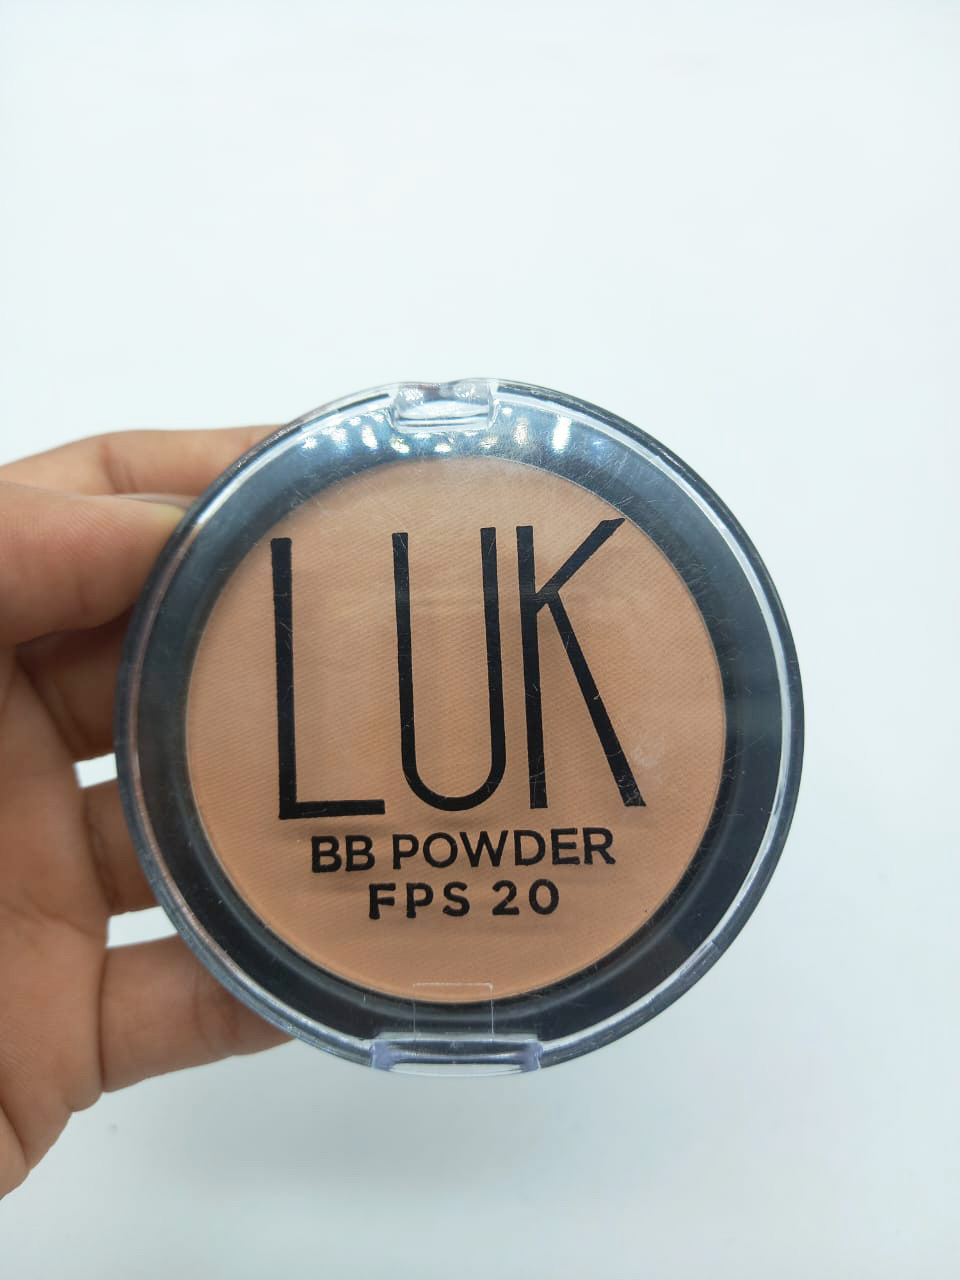 LUK BB Powder Compact